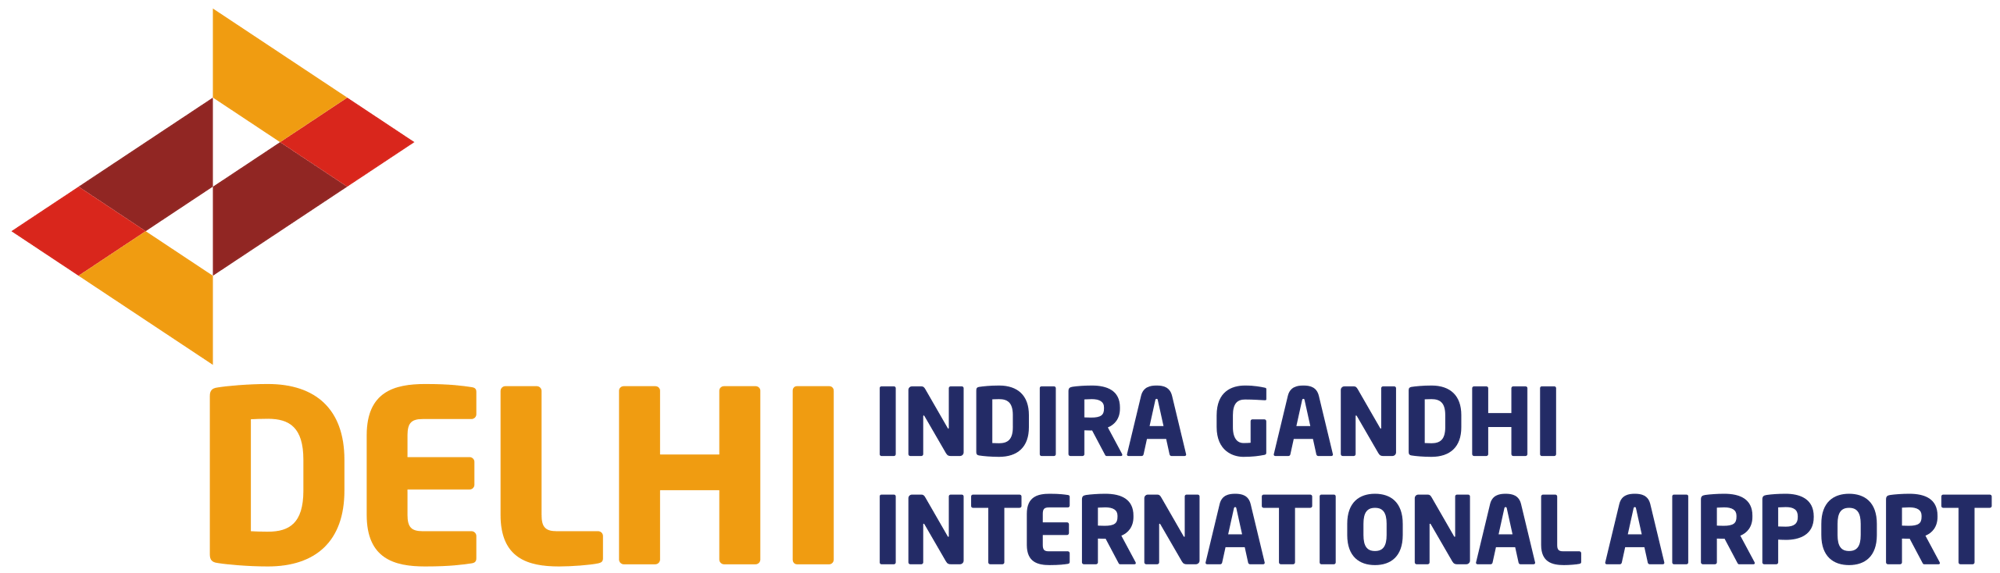 Indira_Gandhi_International_Airport_Logo.svg